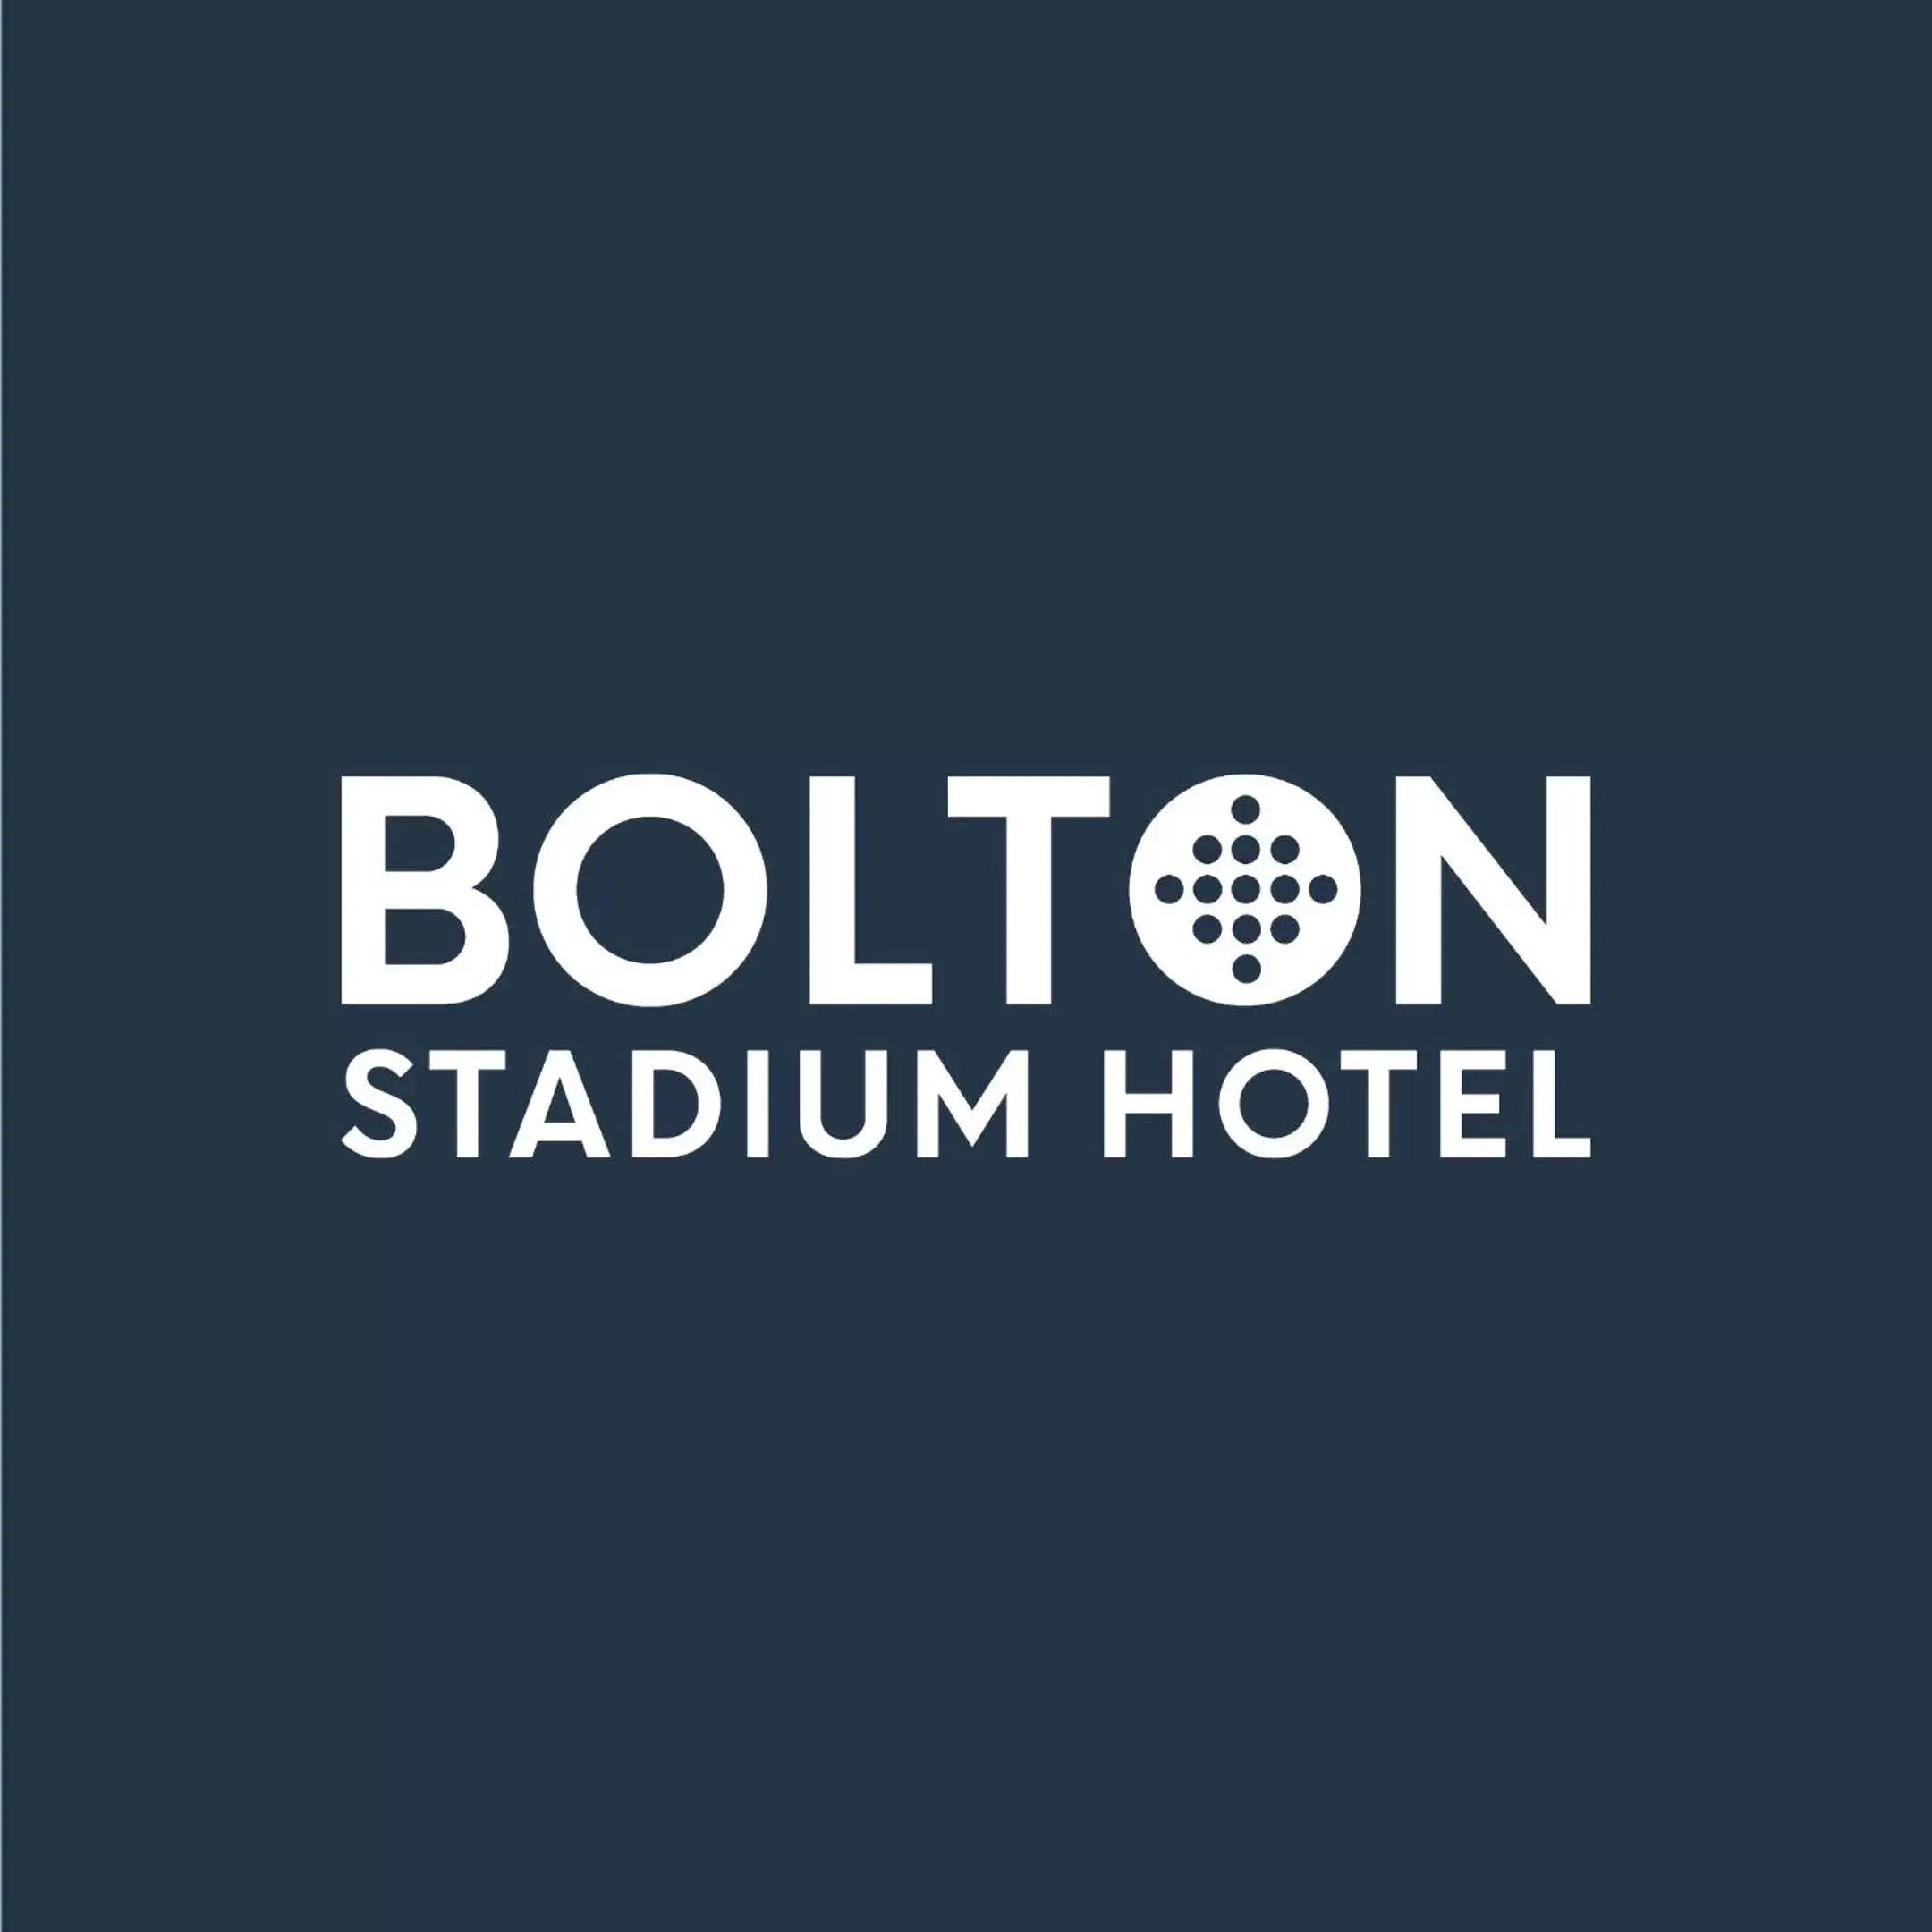 Property Logo/Sign in Bolton Stadium Hotel